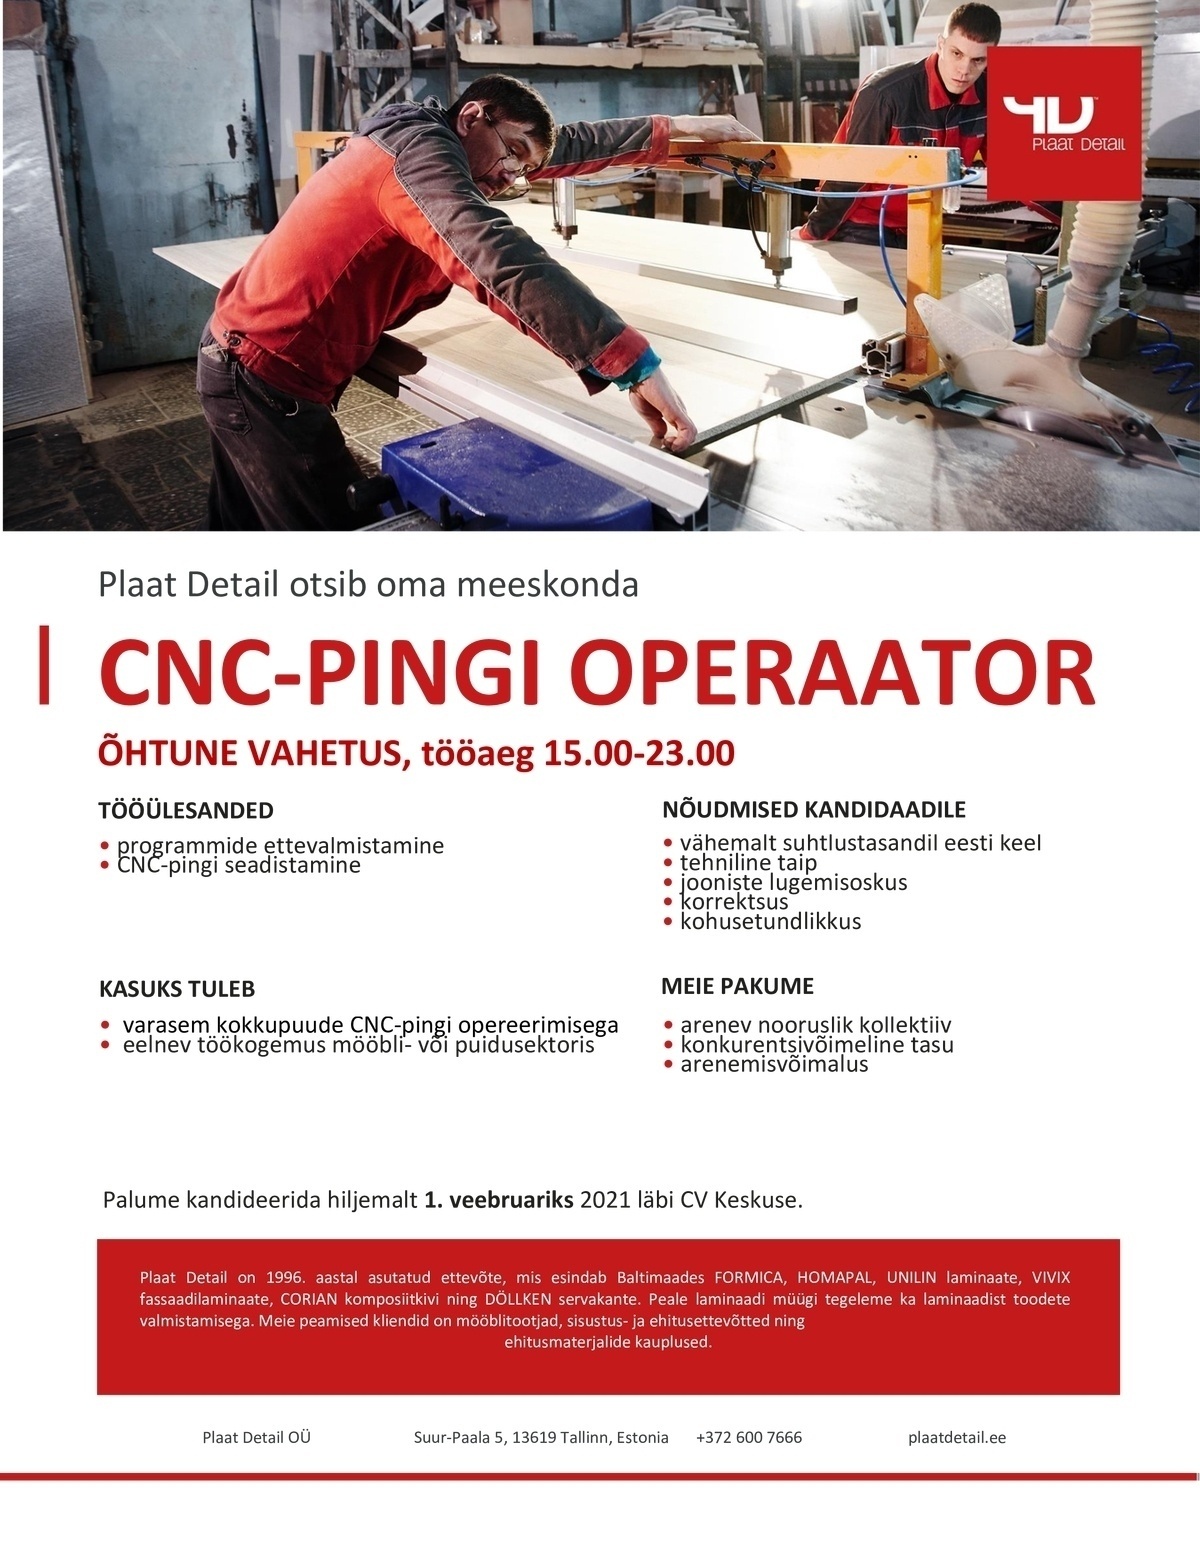 Plaat Detail OÜ Cnc-pingi operaator